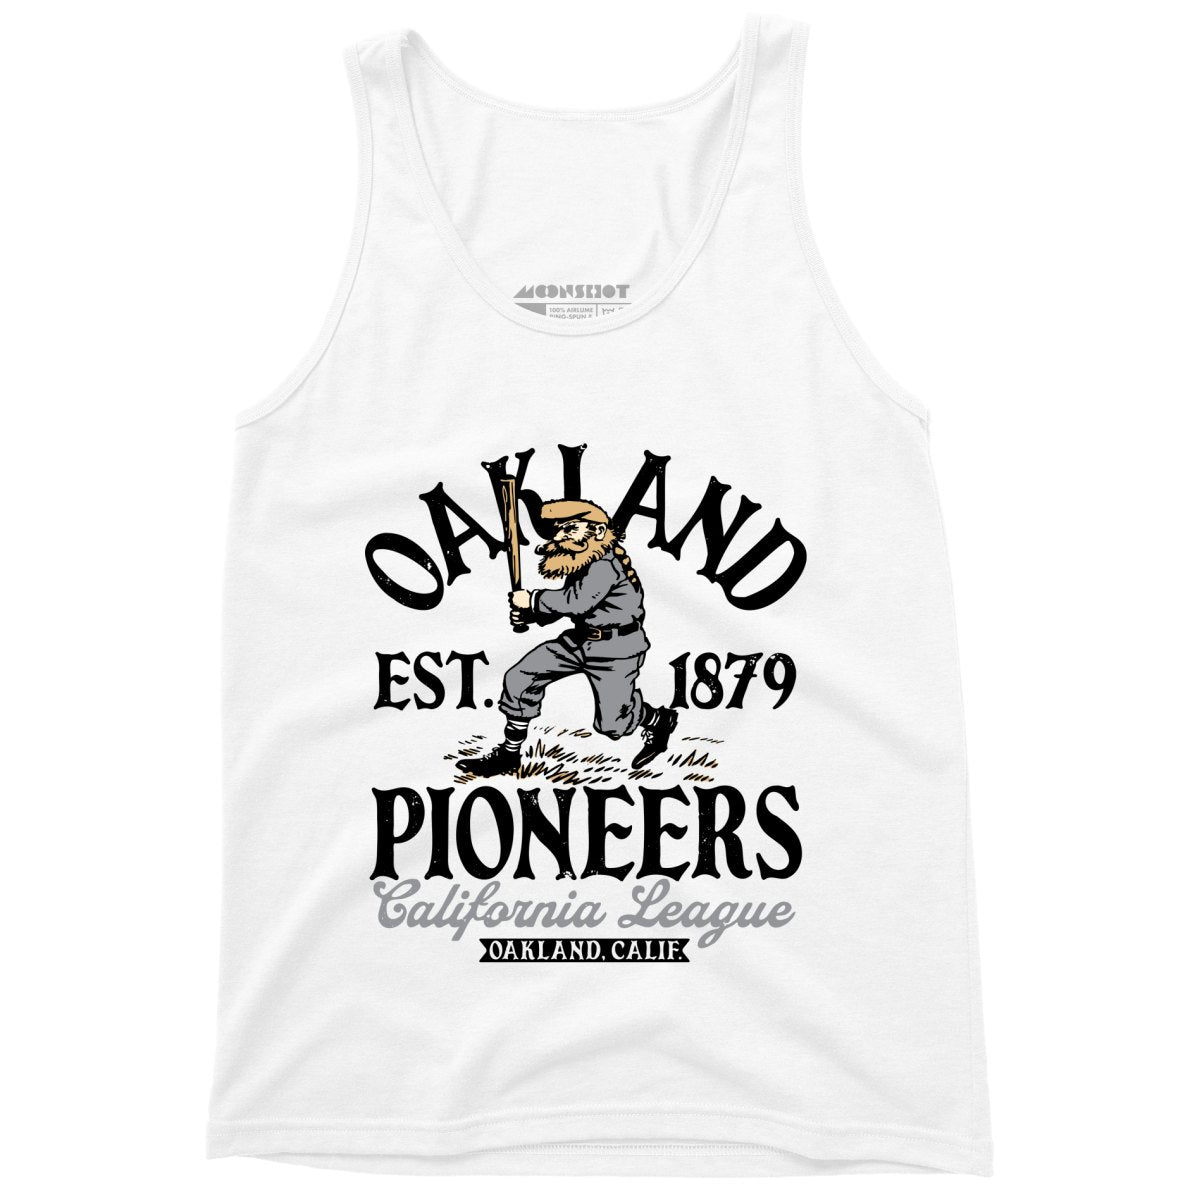 Oakland Pioneers - California - Vintage Defunct Baseball Teams - Unisex Tank Top